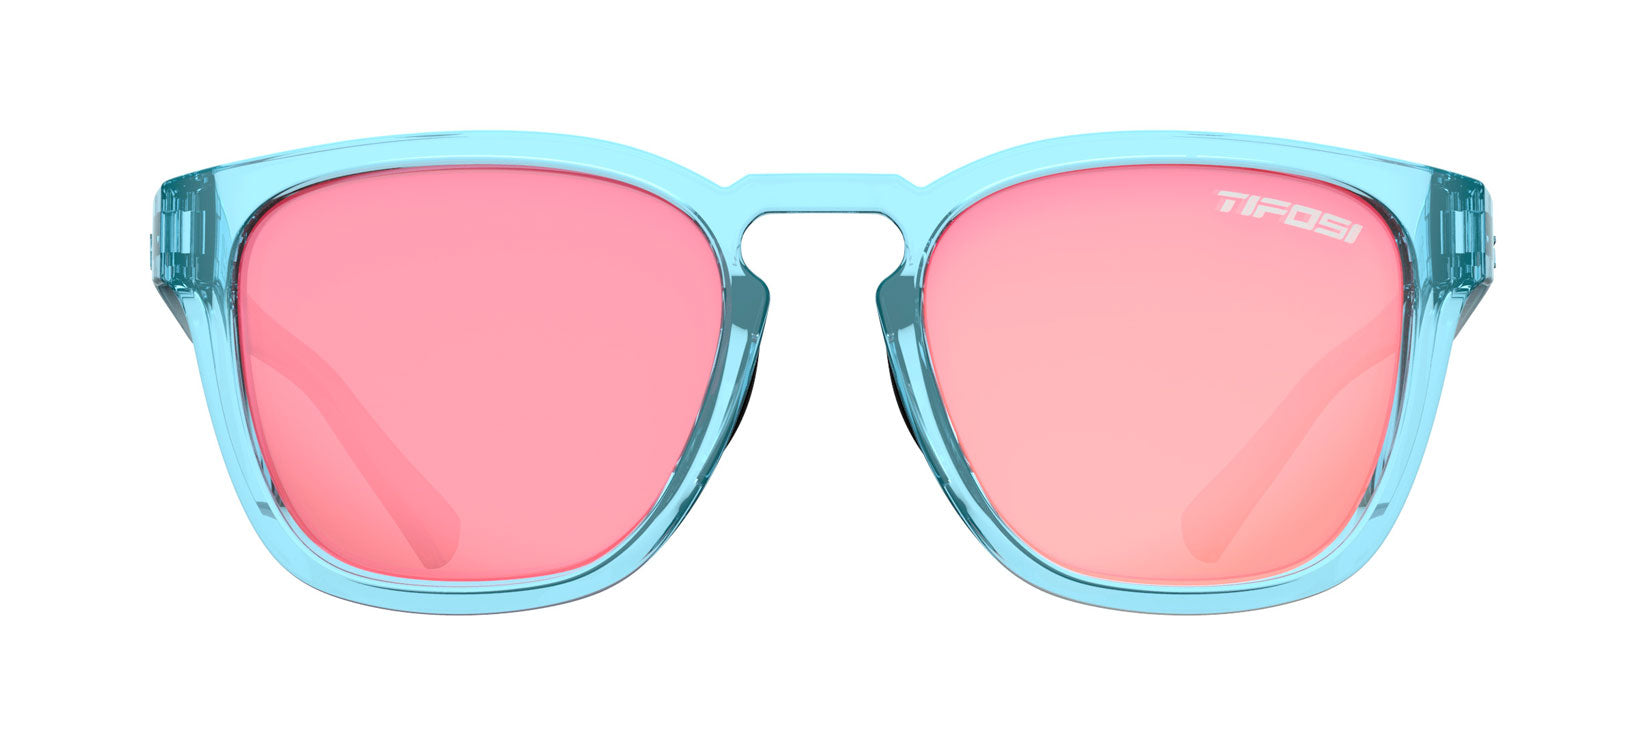 Smirk sport sunglasses in avant teal